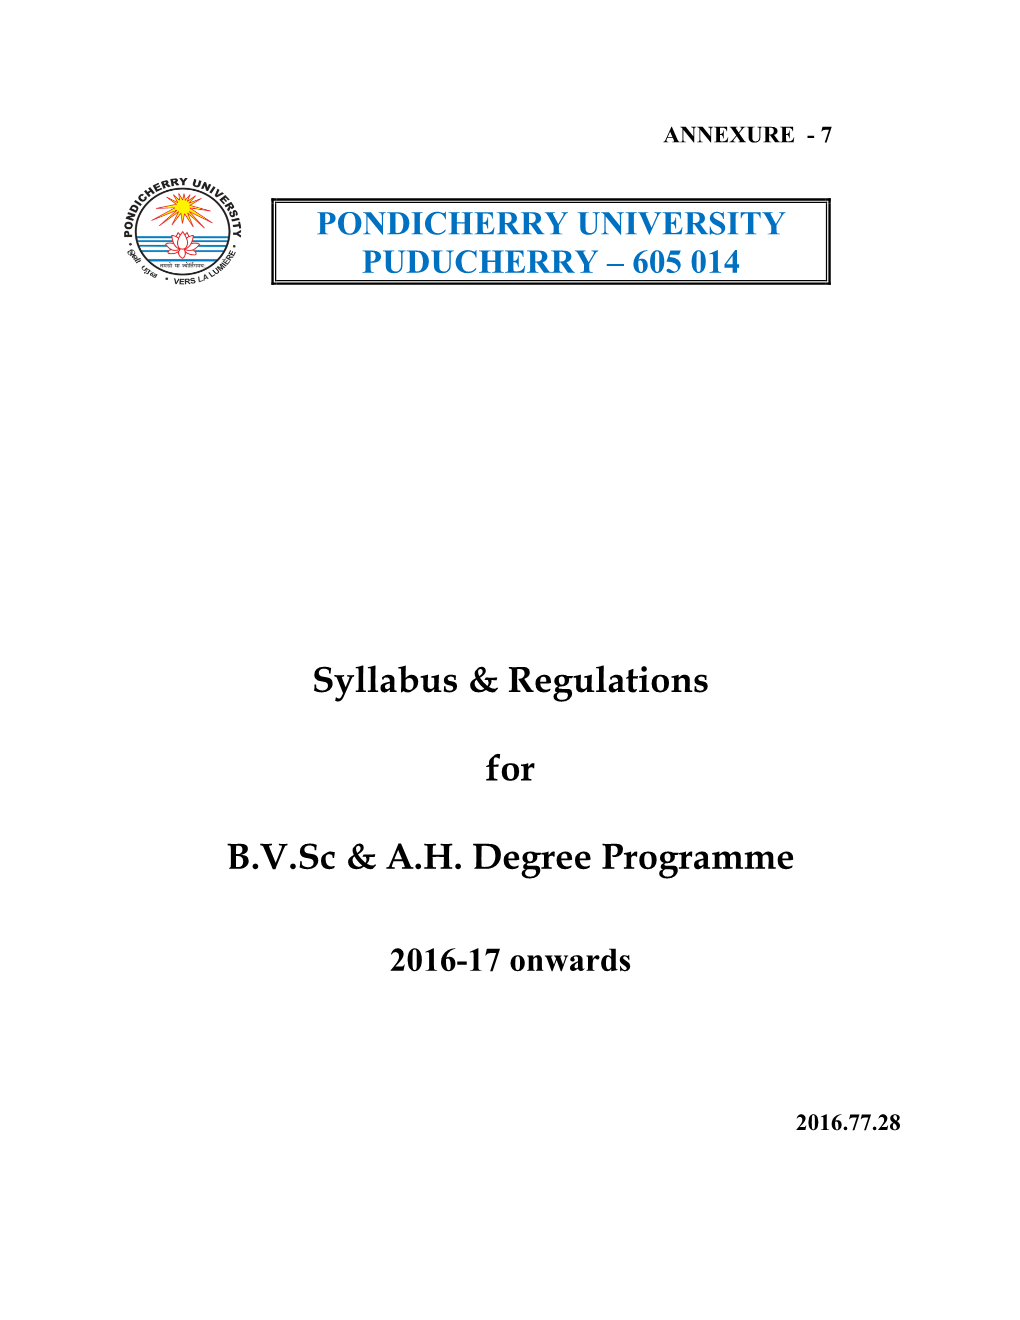 Syllabus & Regulations for B.V.Sc & A.H. Degree Programme